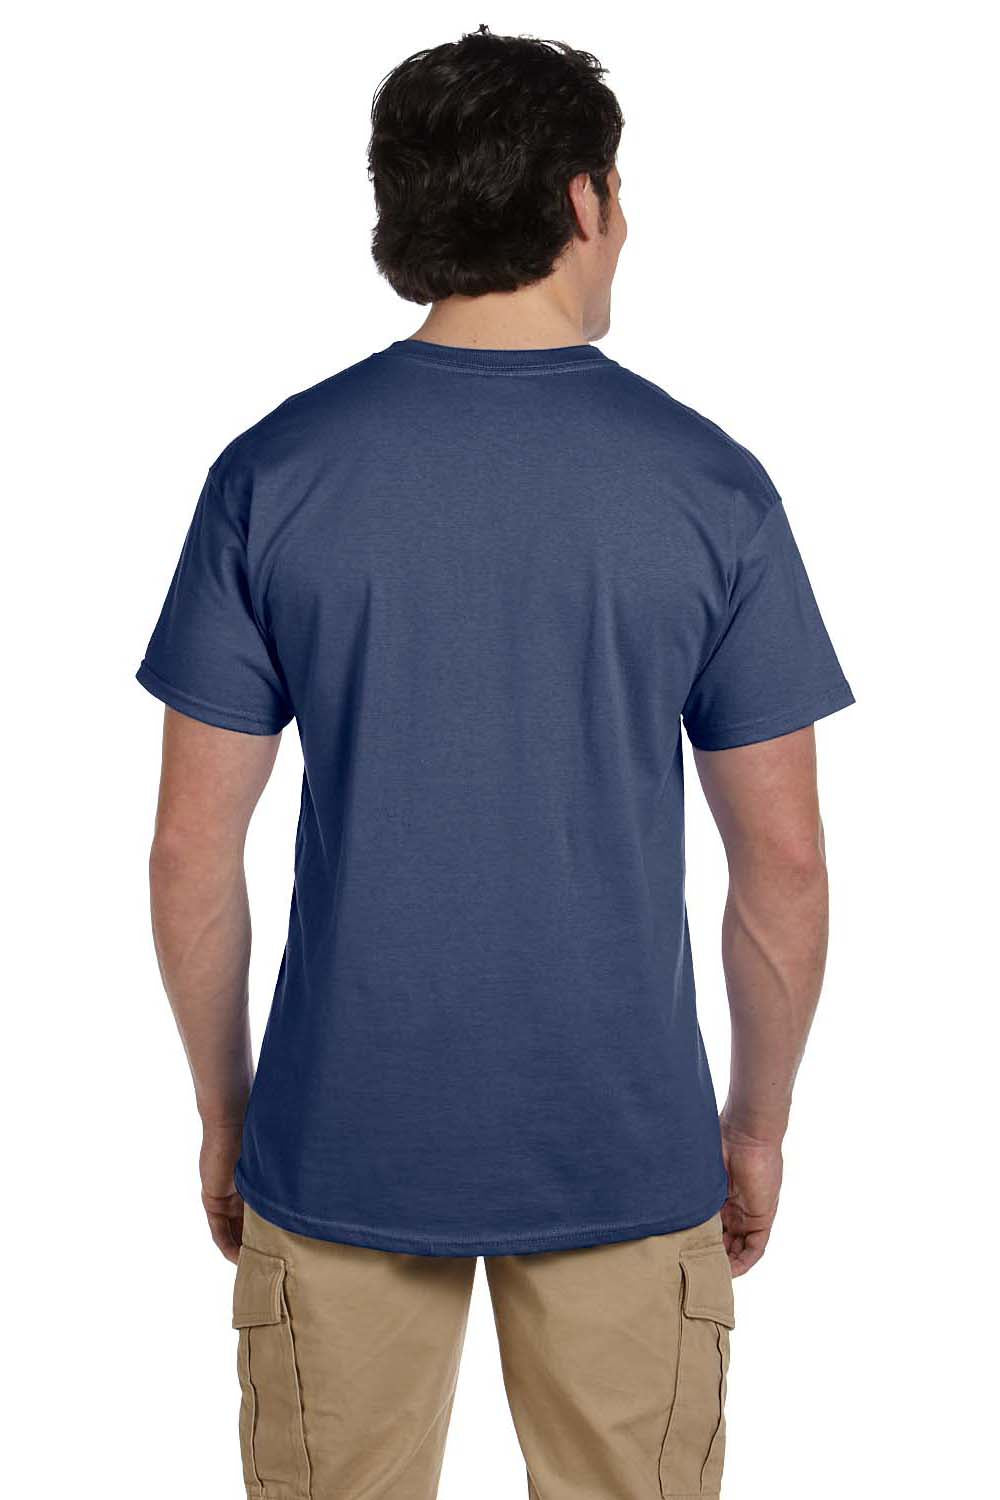 Hanes 5170 Mens EcoSmart Short Sleeve Crewneck T-Shirt Heather Navy Blue Back